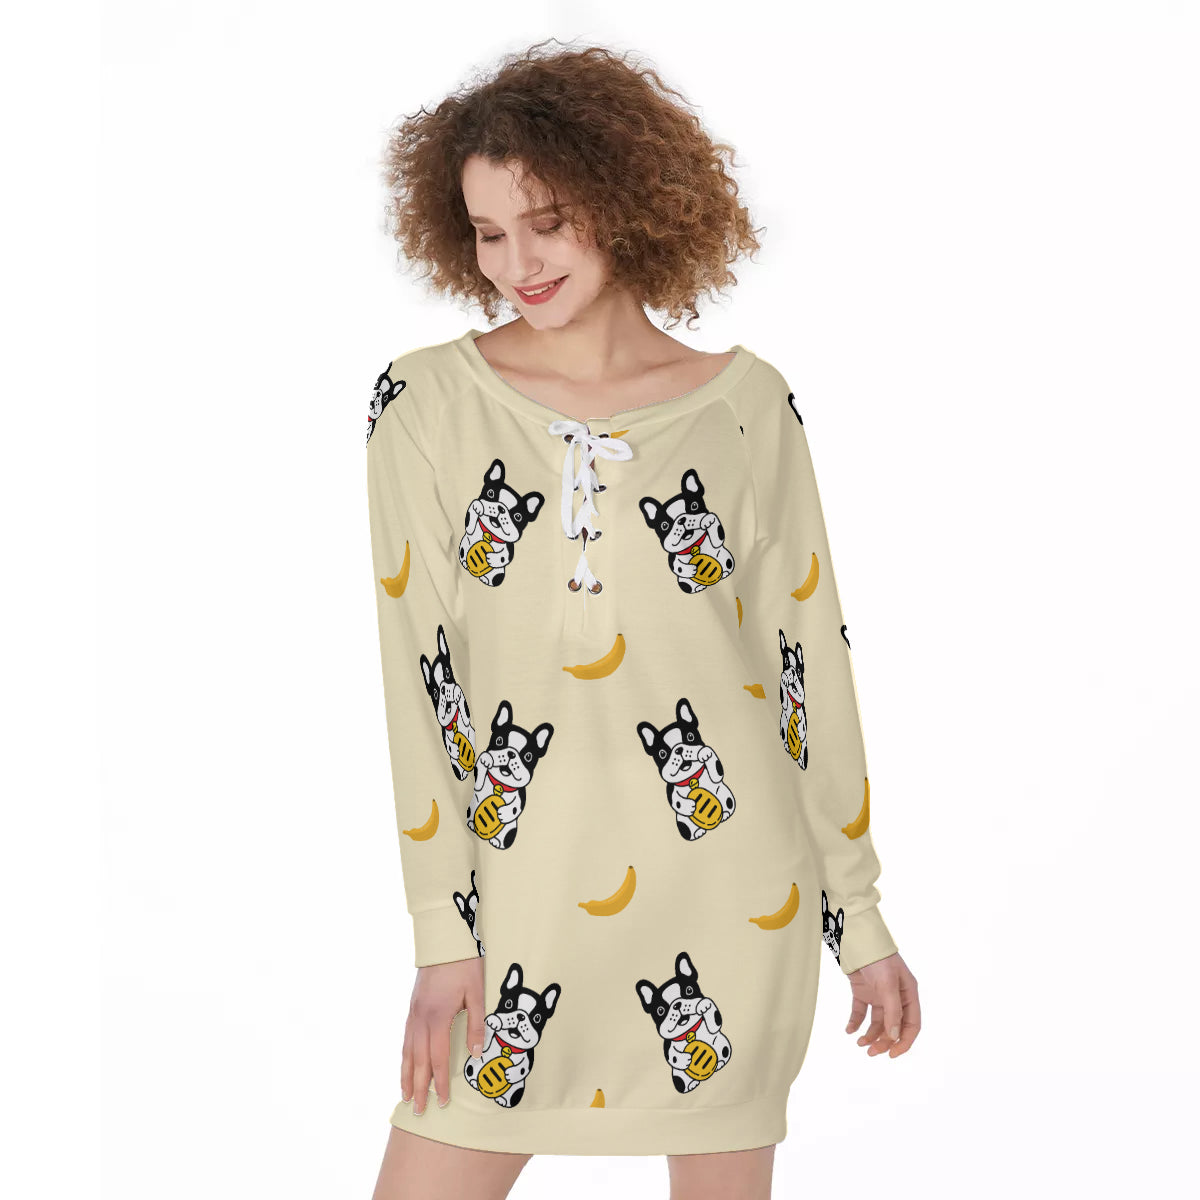 LILY - Women's Lace-Up Sweatshirt - Frenchie Bulldog Shop